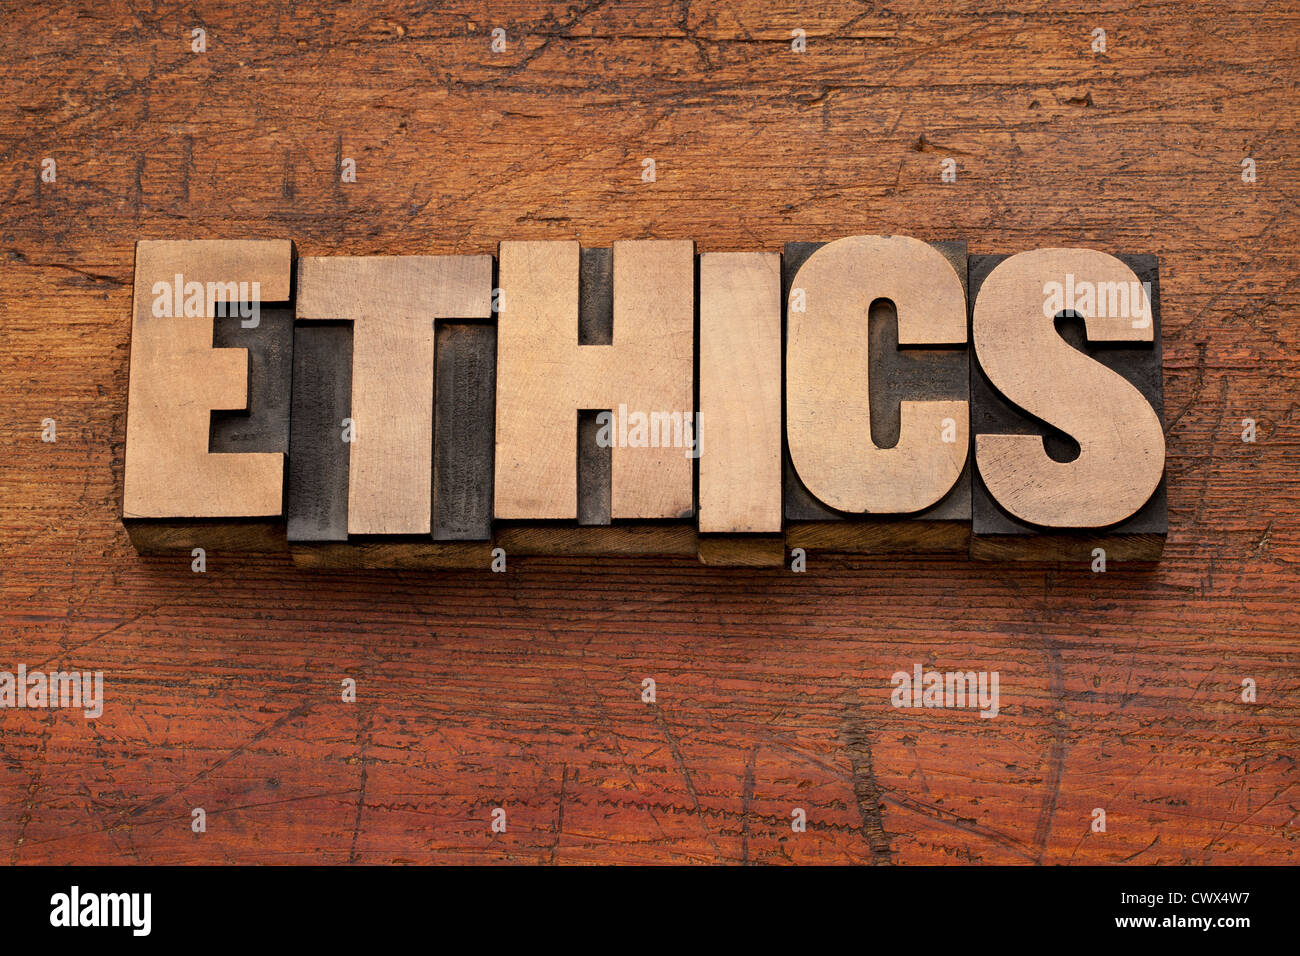 ethics word in vintage letterpress printing blocks against grunge wood background Stock Photo